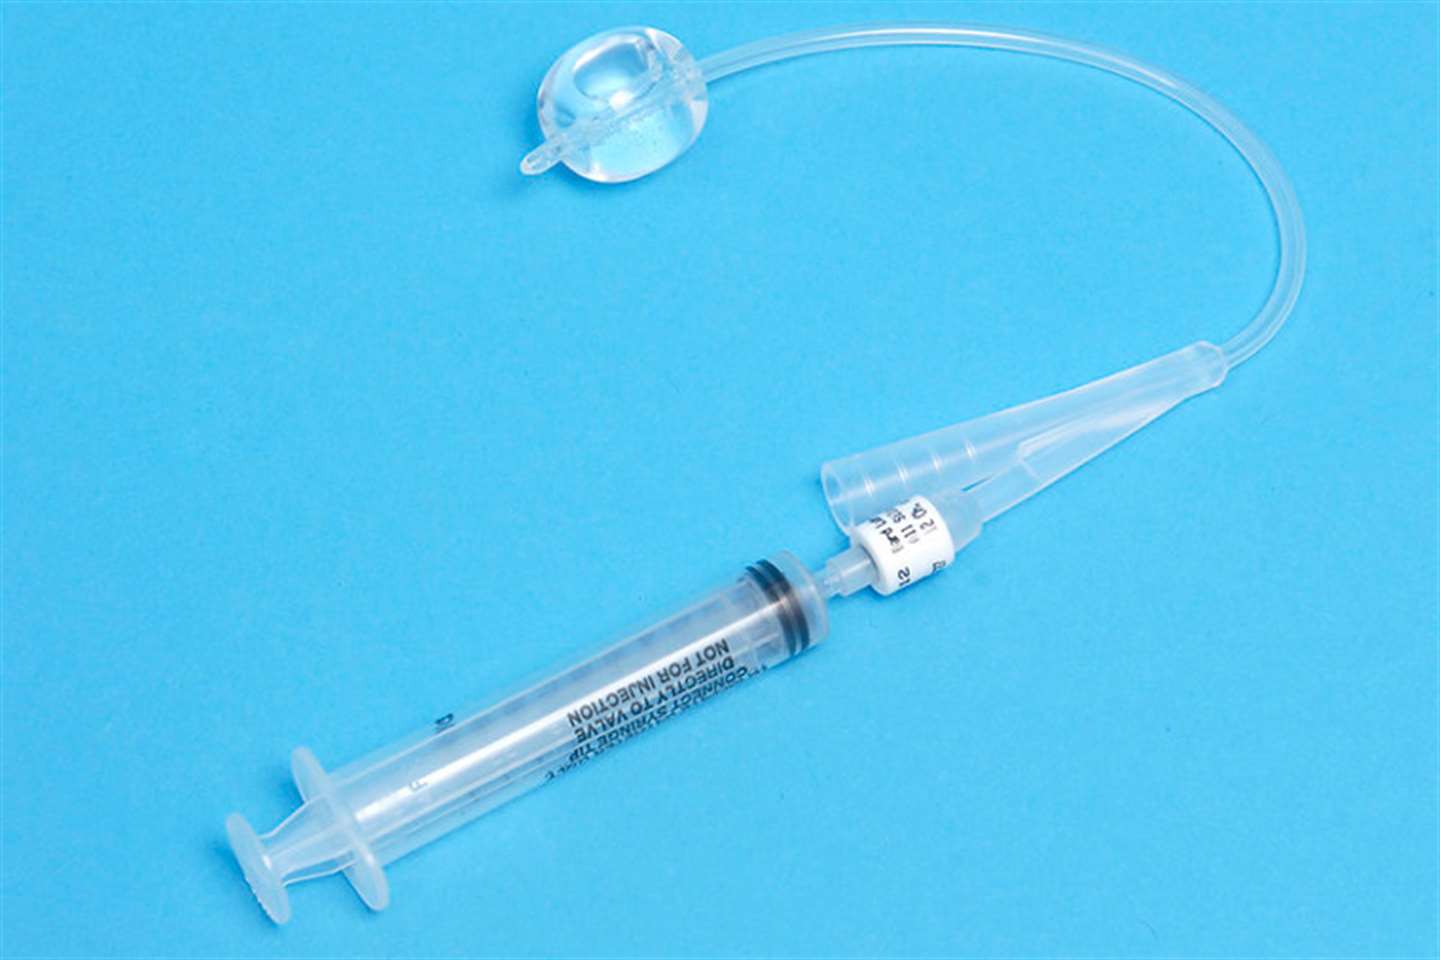 Silicone Foley indwelling catheter showing syringe for balloon inflation